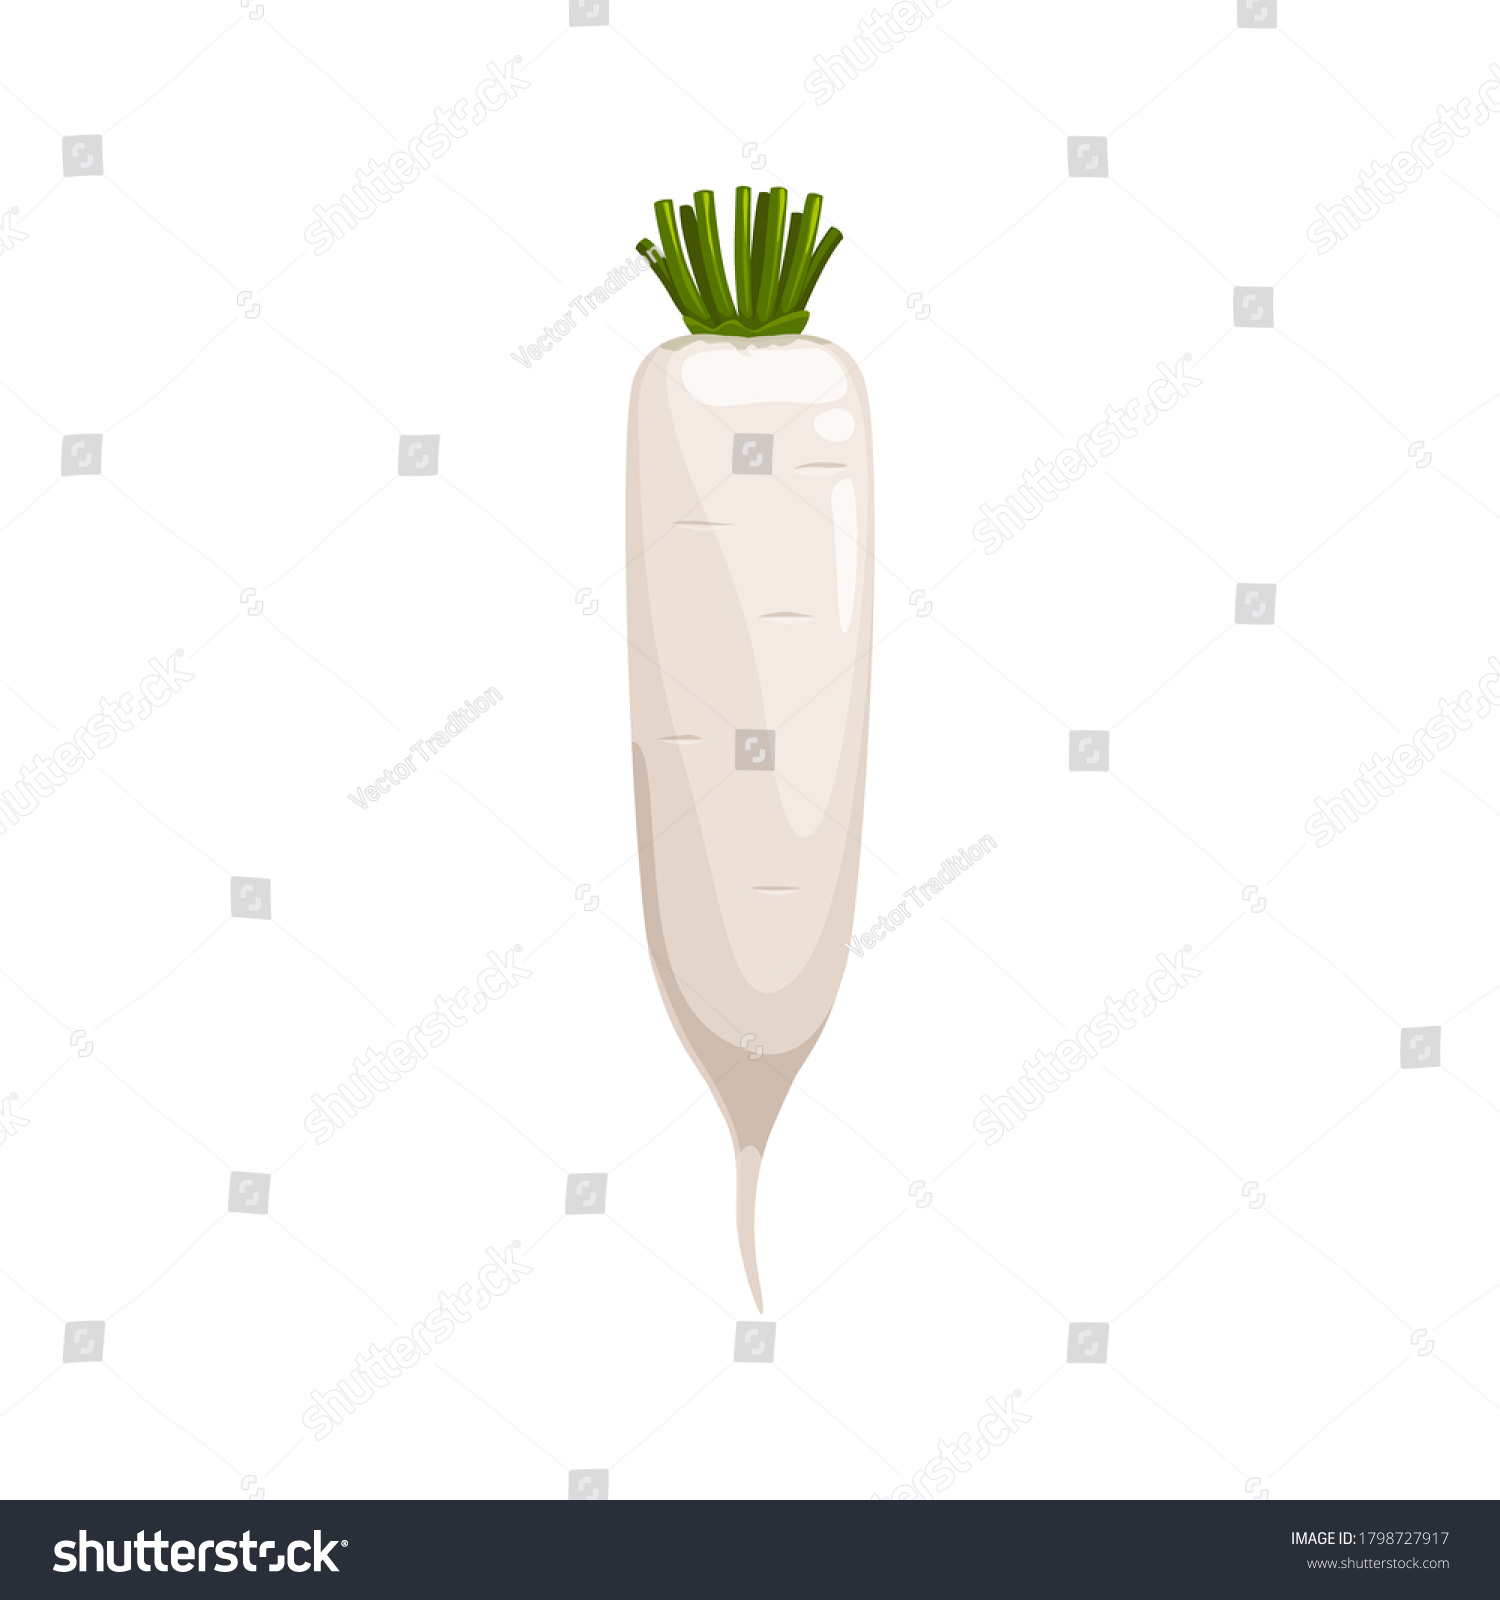 Daikon radish with green stem isolated vegetable root. Vector horseradish rhizome plant, organic spice condiment, realistic 3d horse-radish. White radish, fresh veggie with green stem, organic food #1798727917